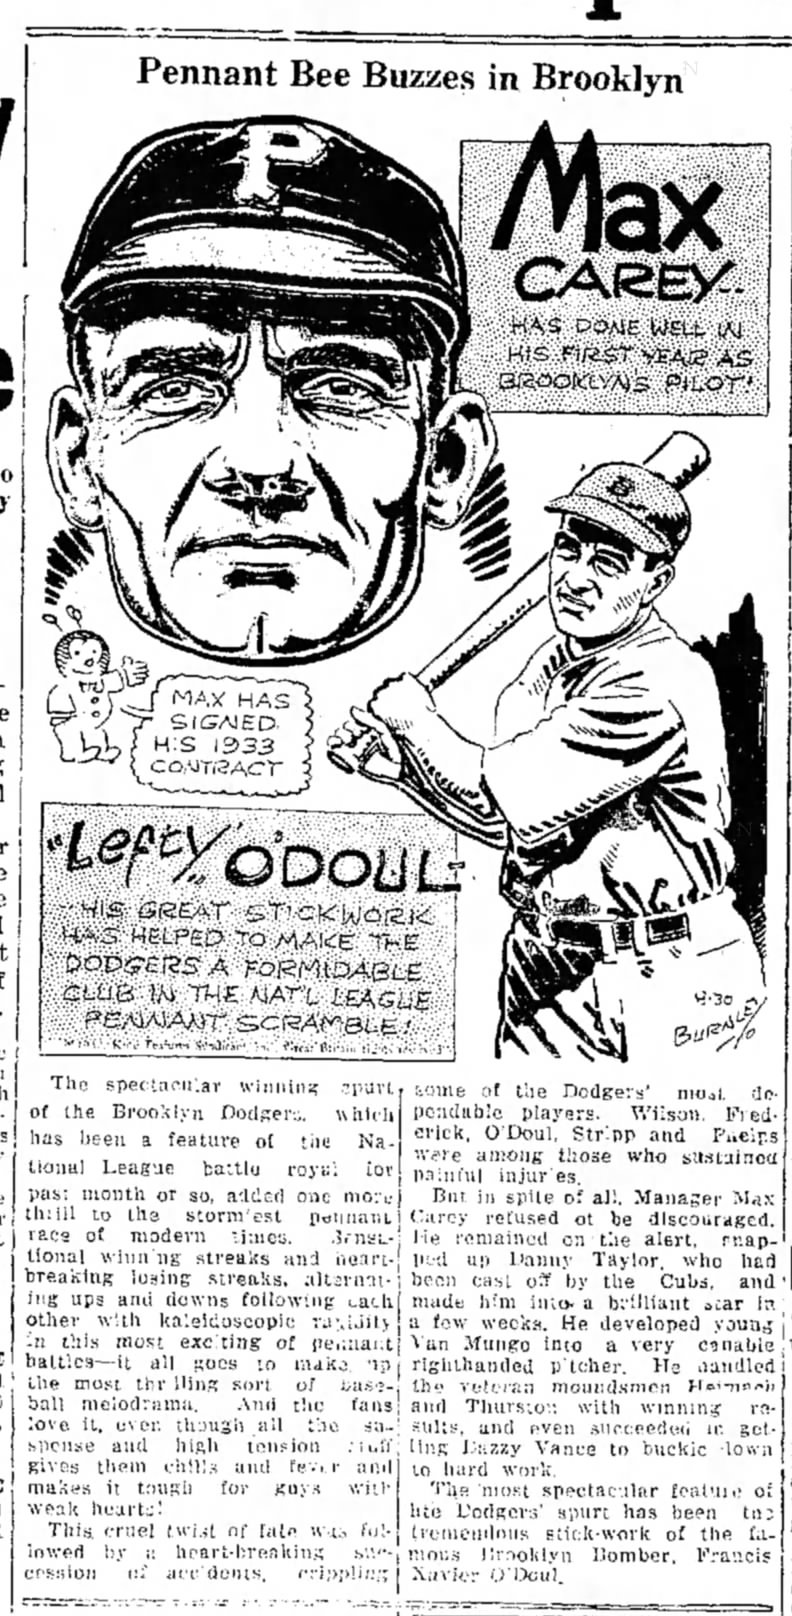 Brooklyn Bombers = Brooklyn Dodgers (1932).